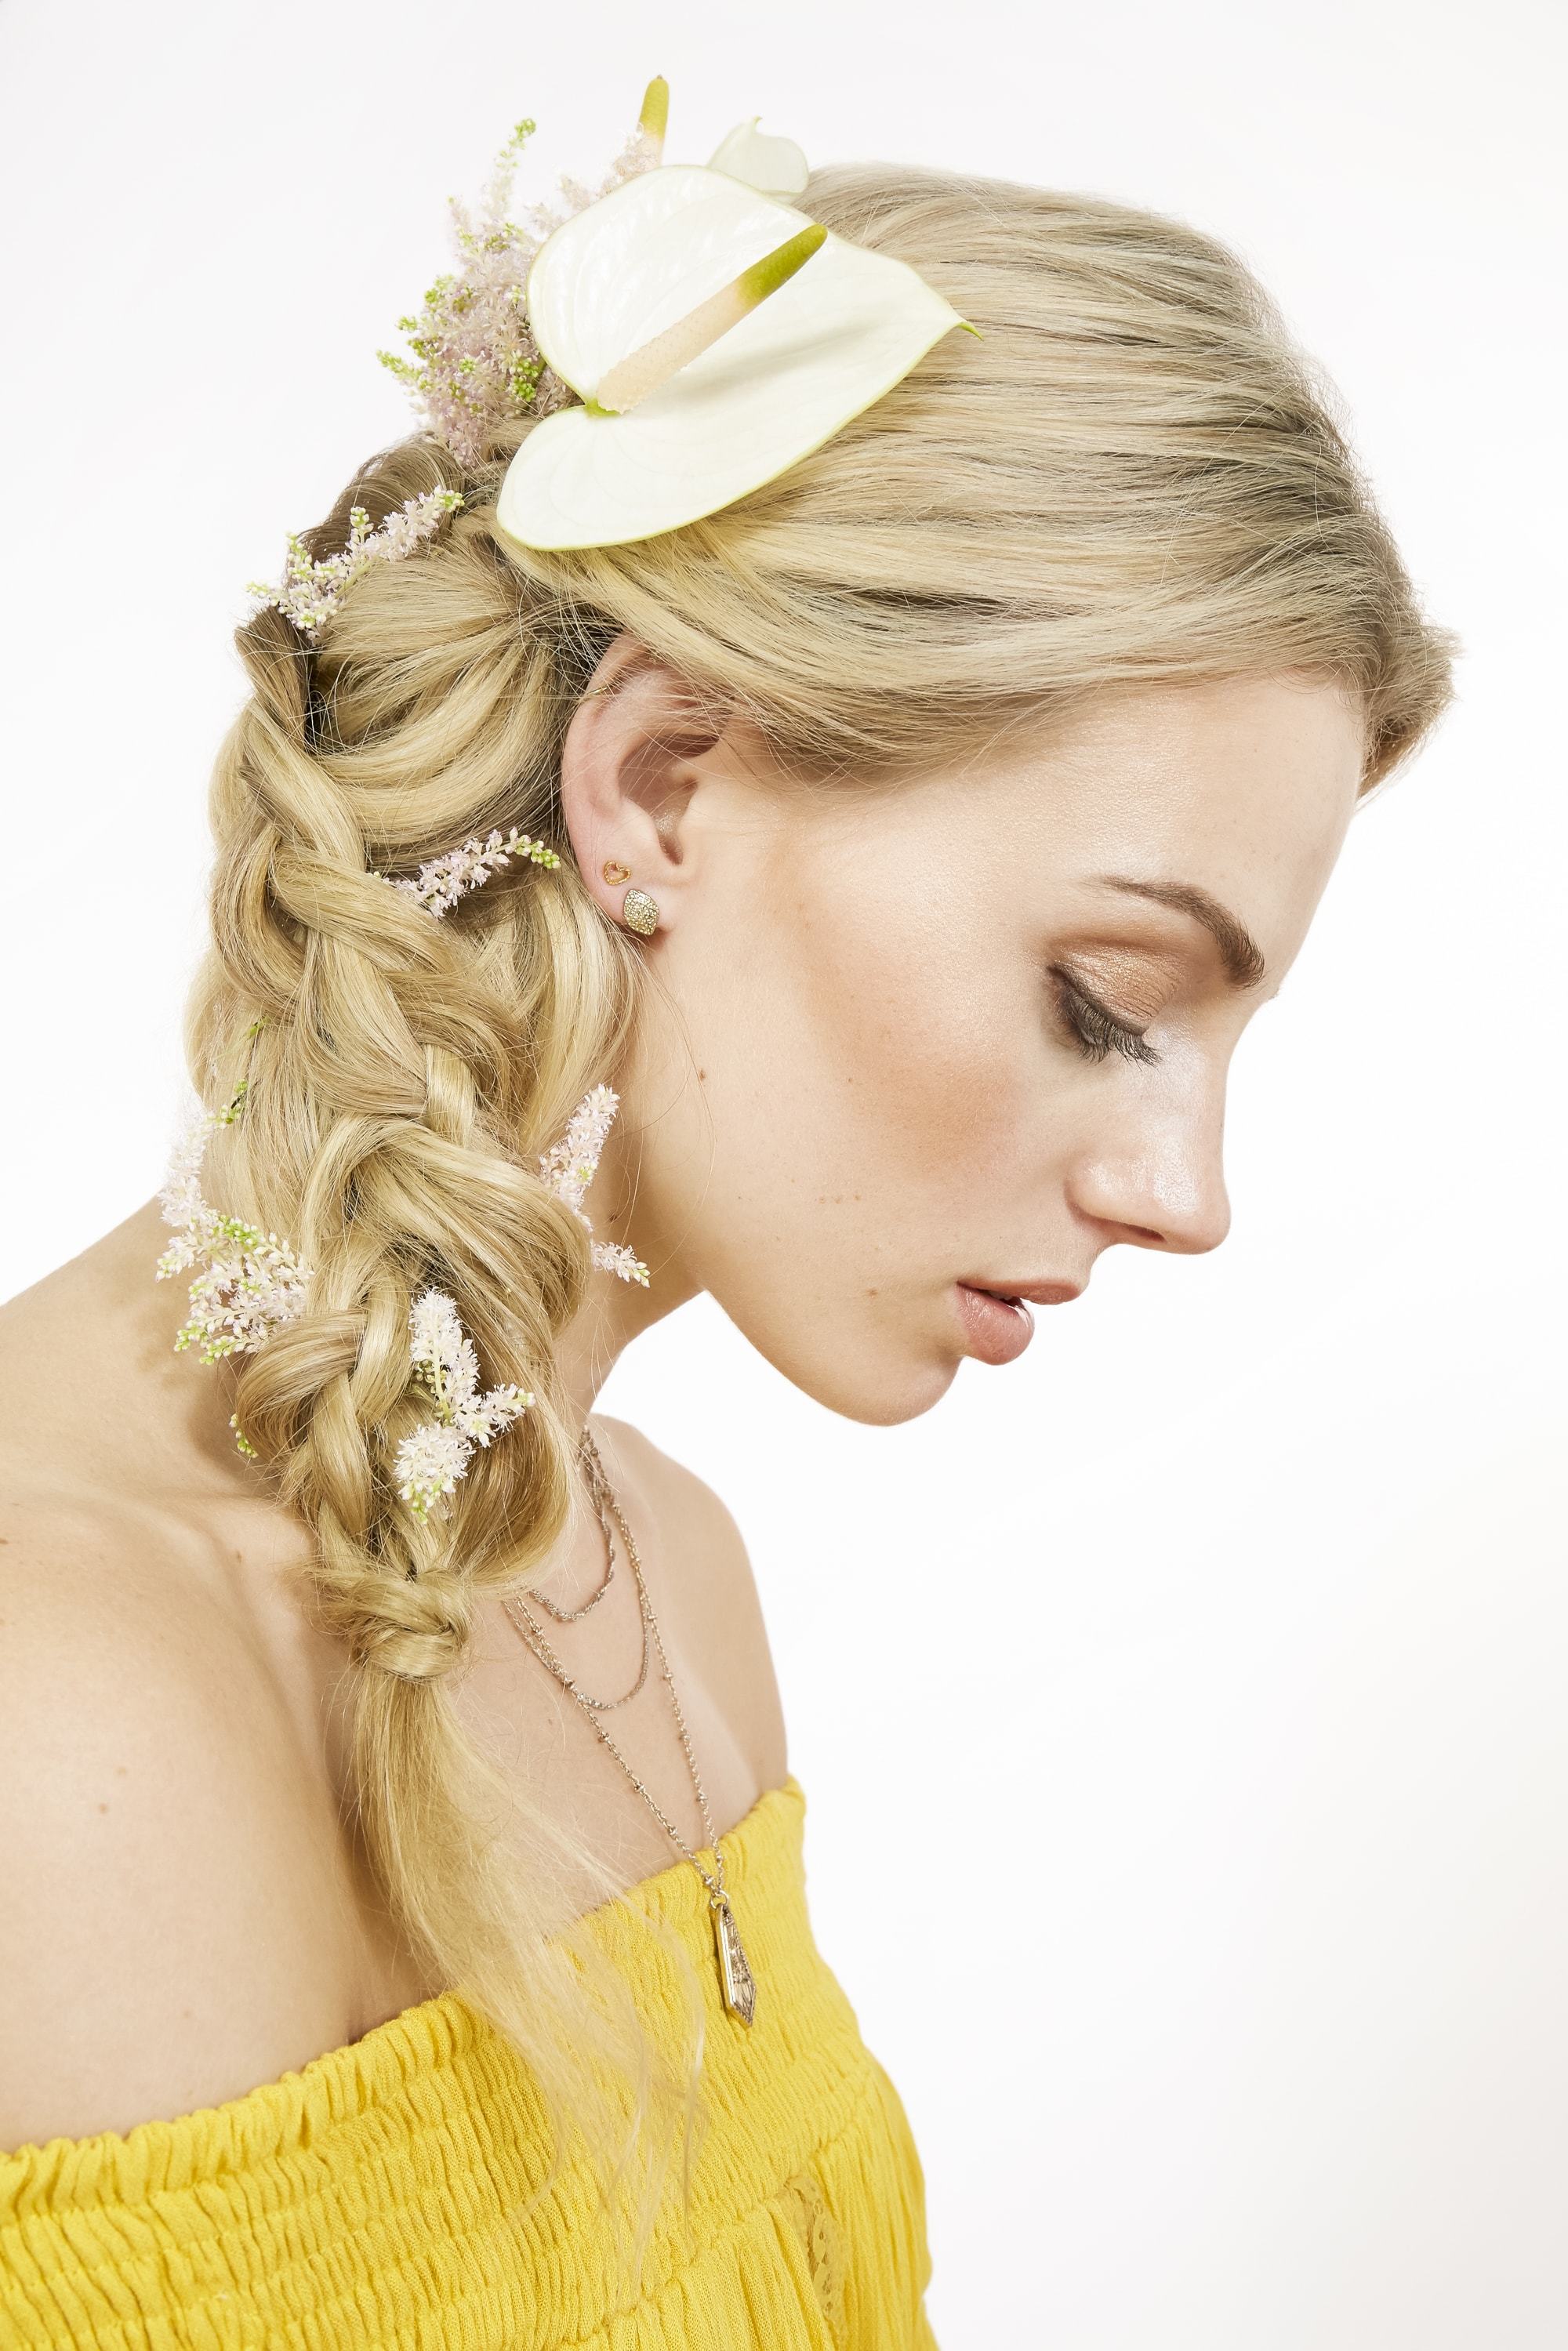 Bridal flower headpiece, hair accessory - Creamy floral petite garden comb  - Style #978 | Twigs & Honey ®, LLC